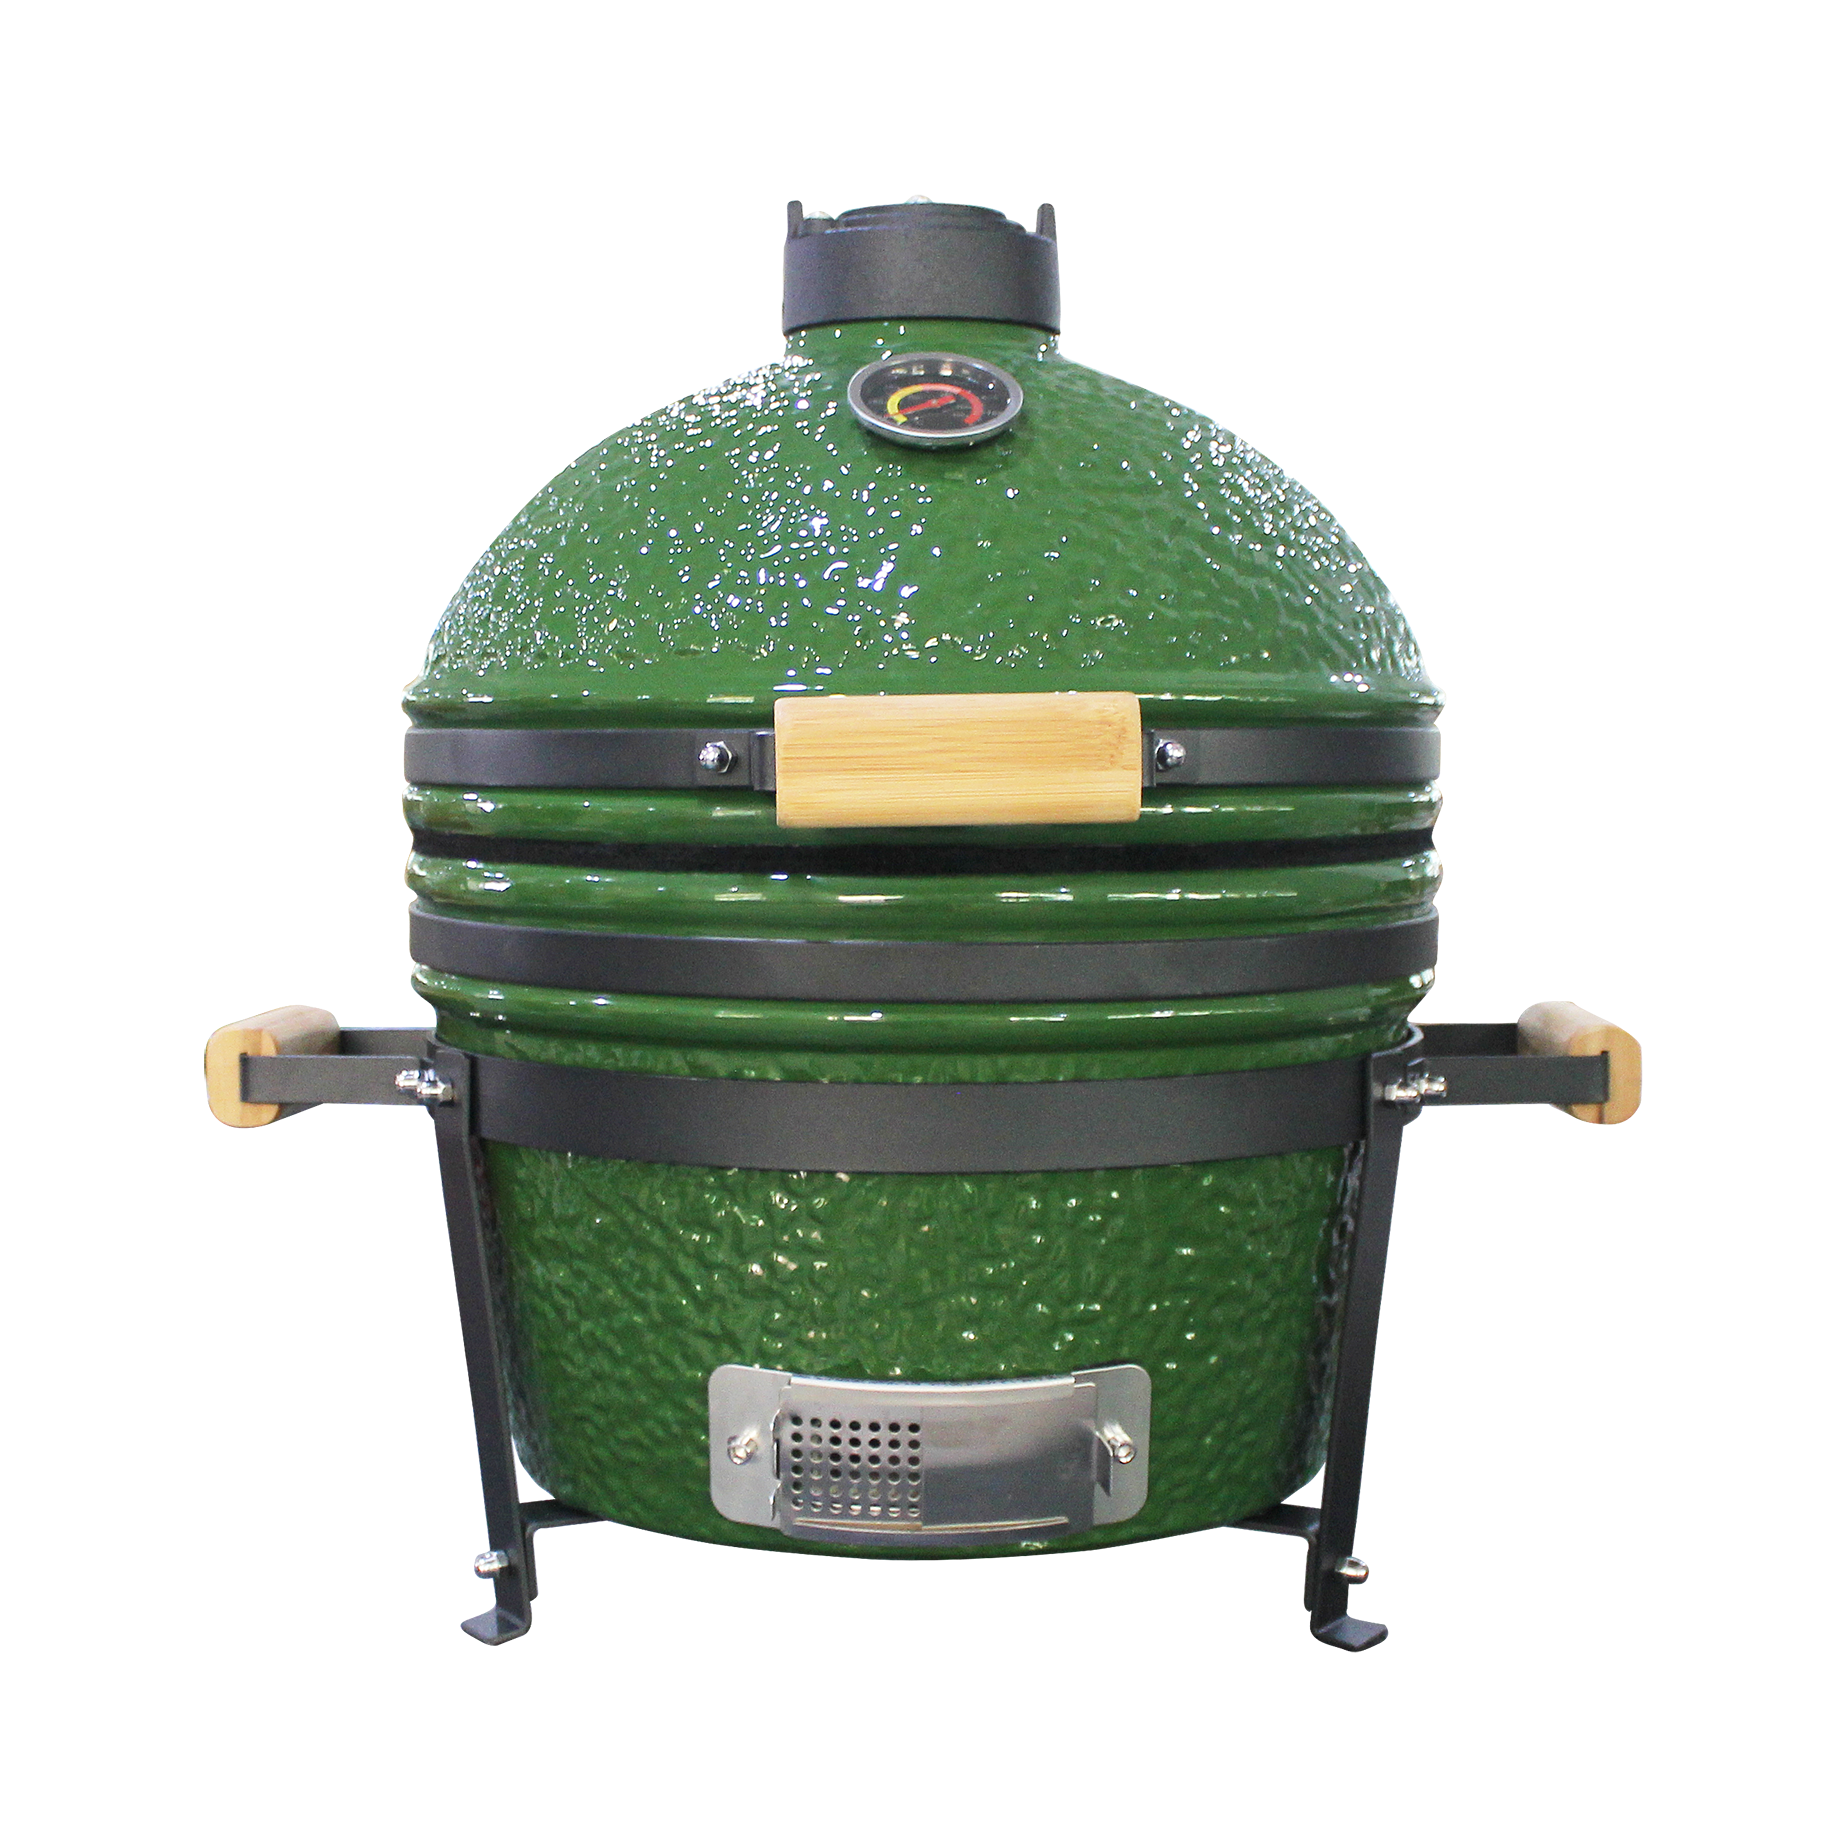 Auplex 16 inch mini size green ceramic bbq grill Featured Image